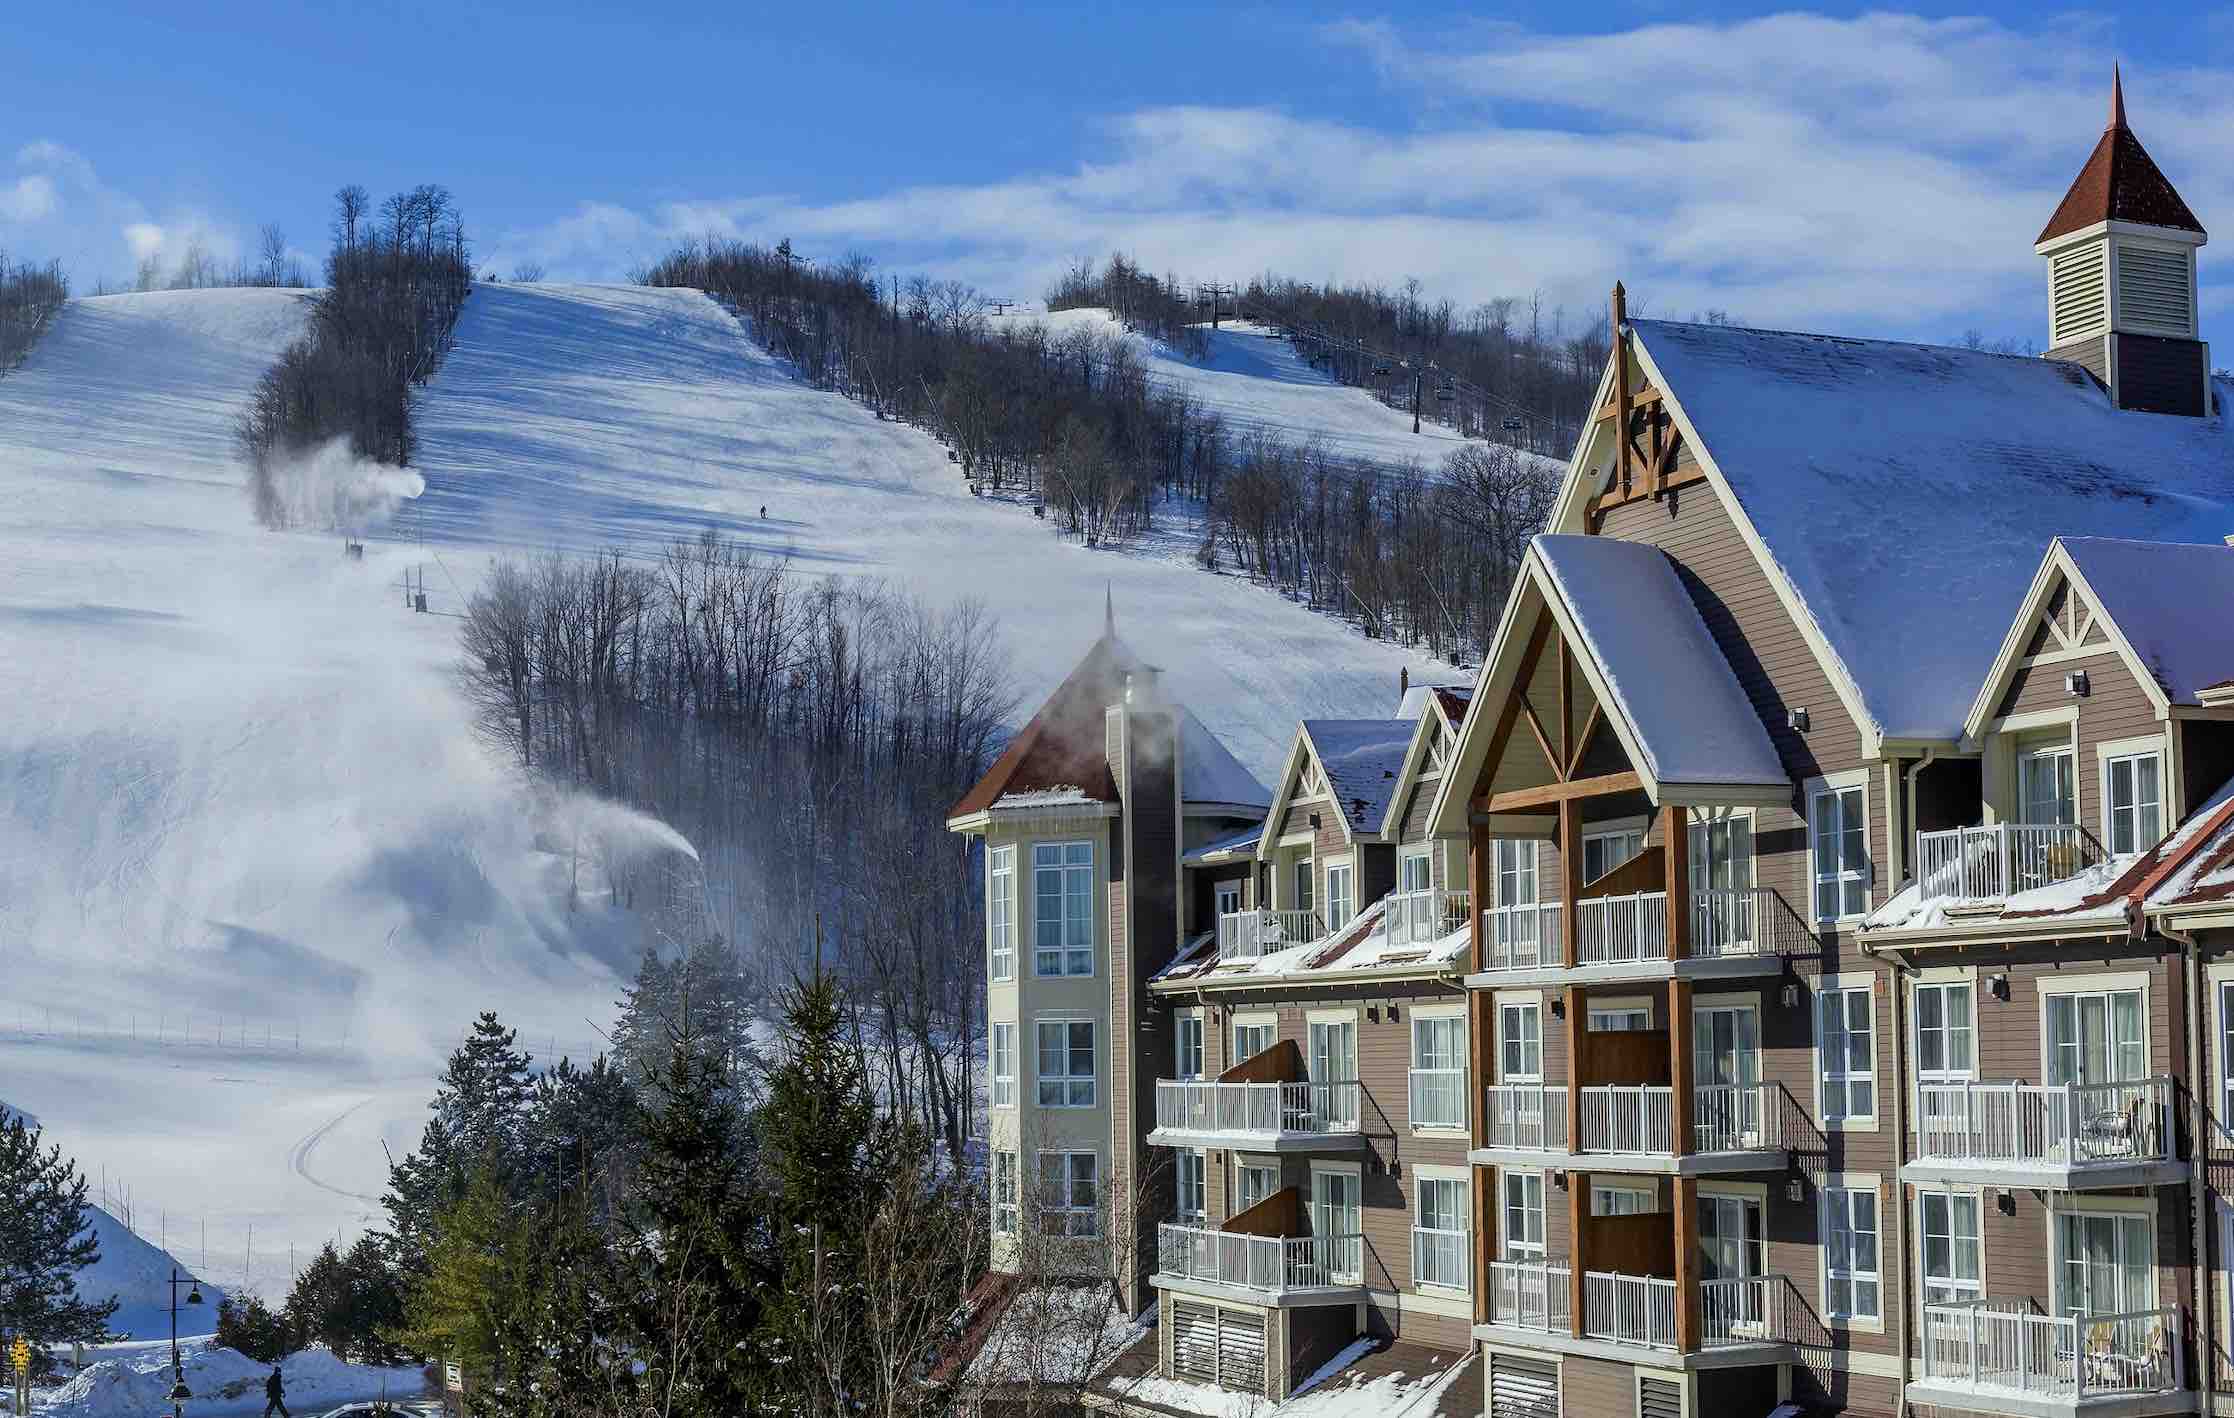 shutterstock_555831967-MasterPhoto - Blue Mountain Resort skiing hills in daylight skiing at Blue Mountain Resort